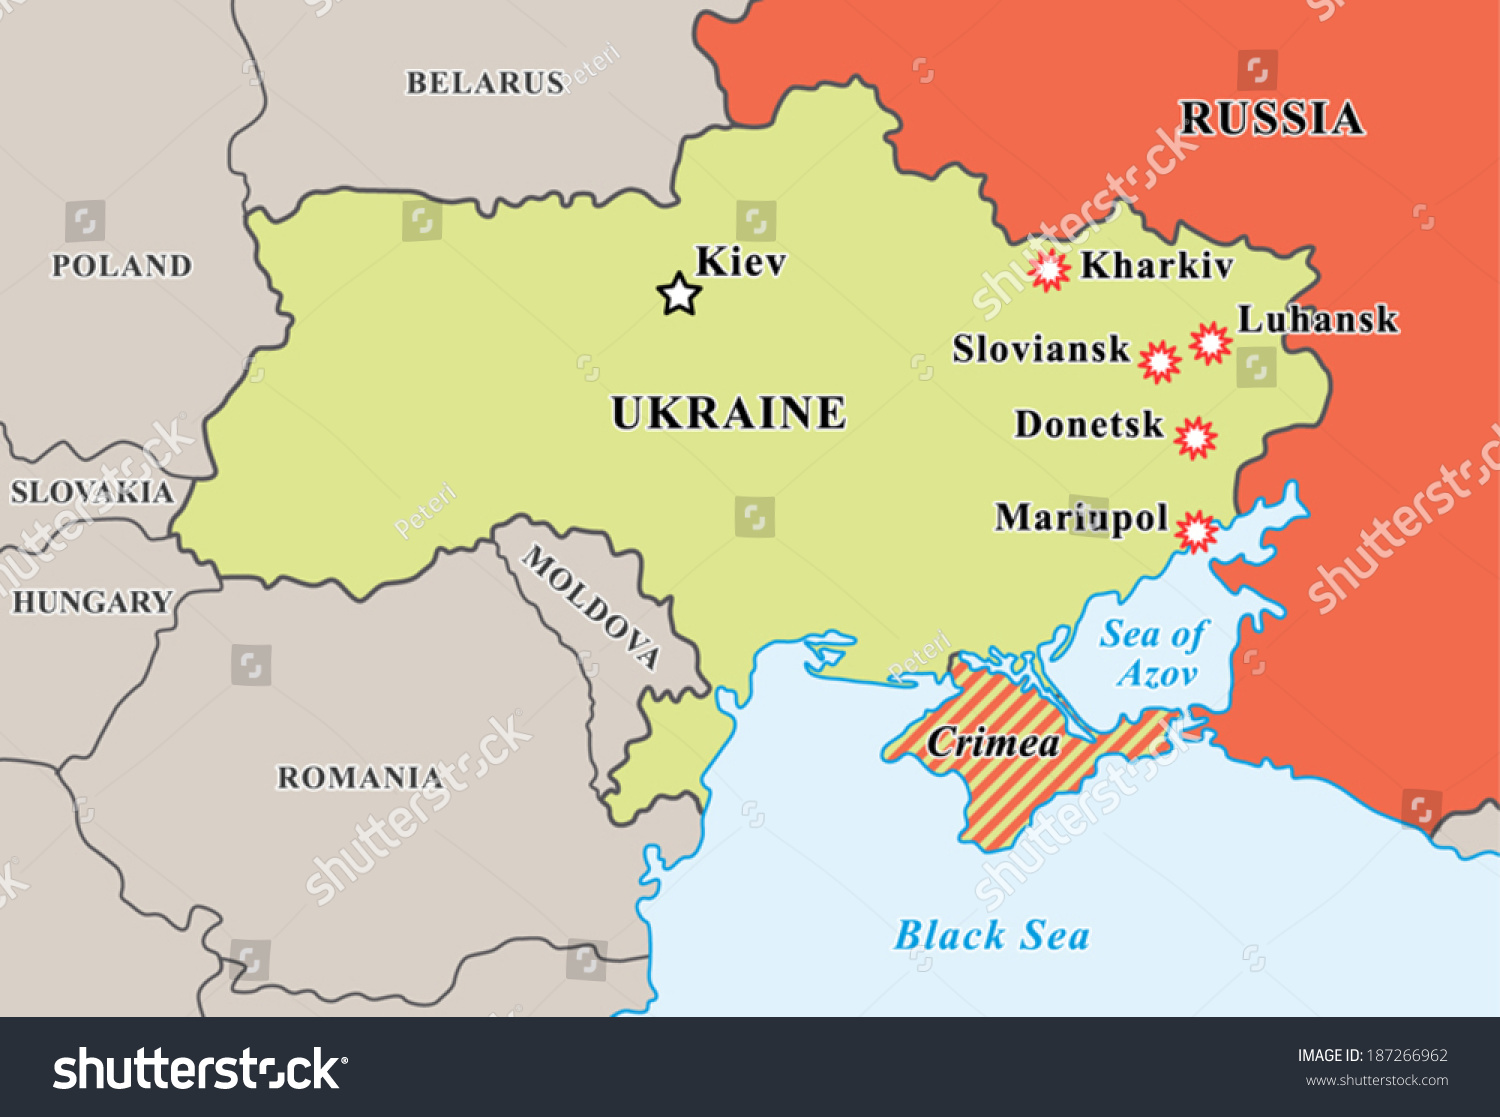 Ukraine In Russian Kharkiv 46